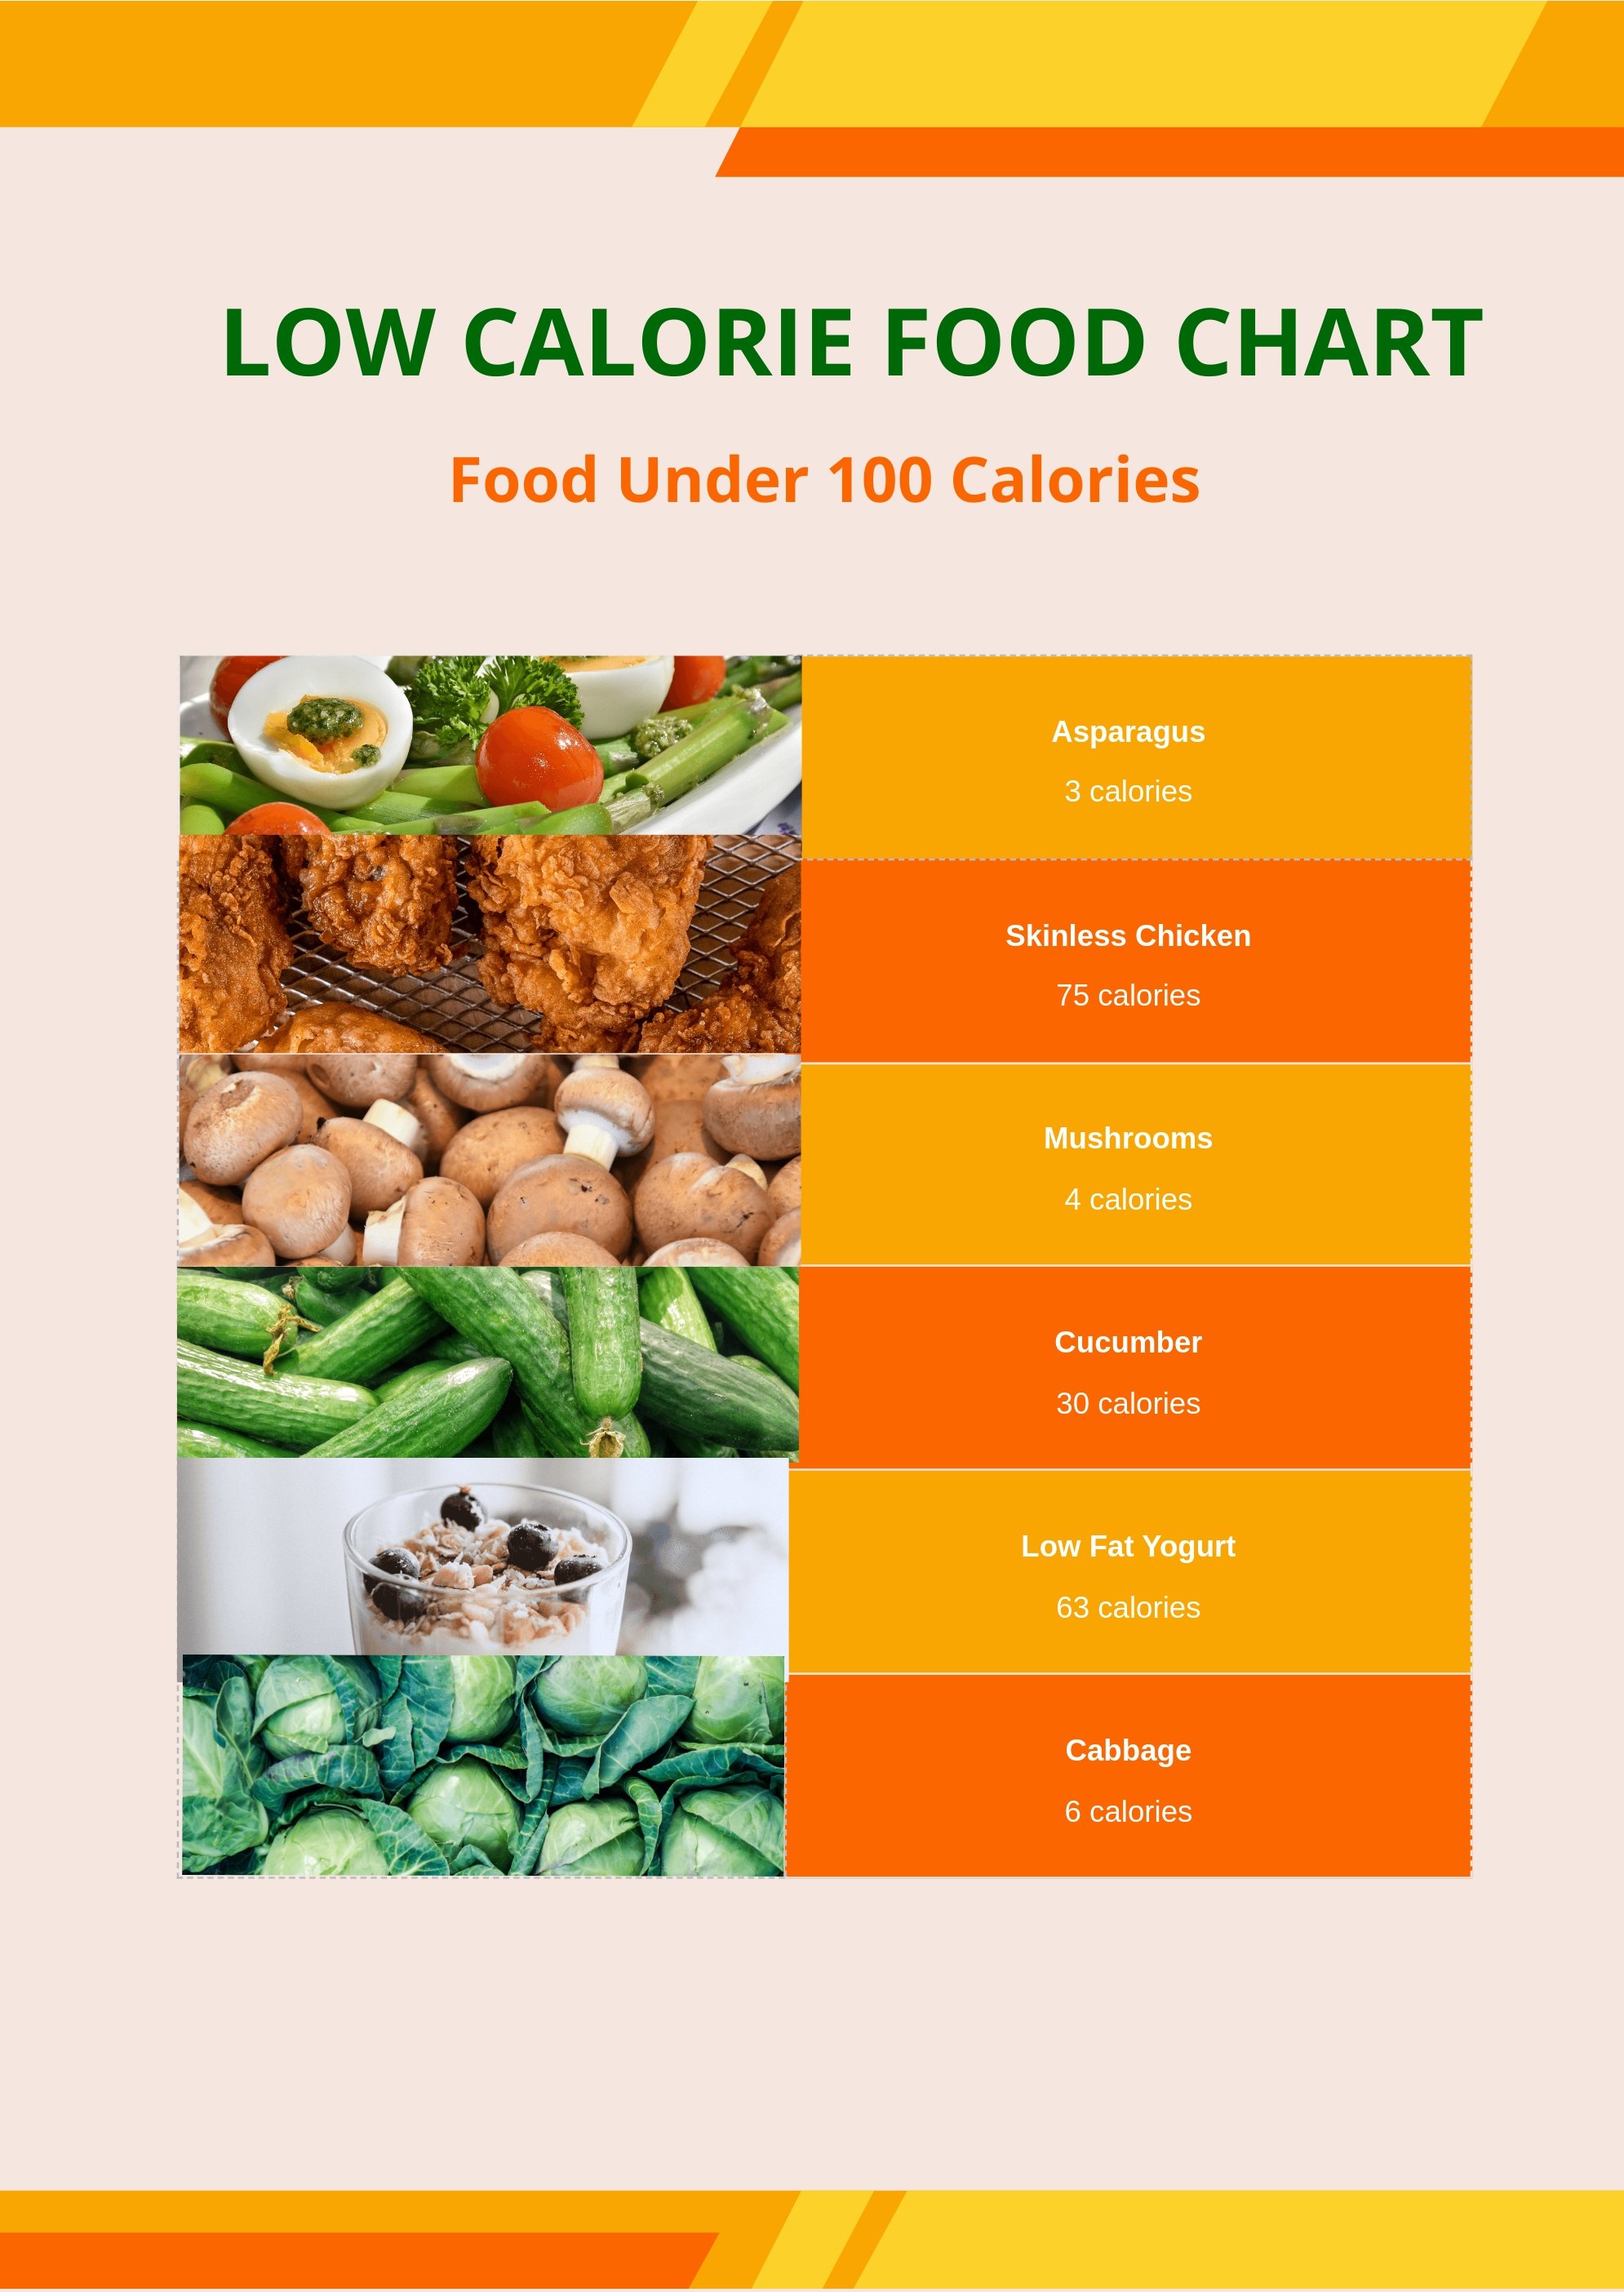 Low Calorie Food Chart in PDF, Illustrator